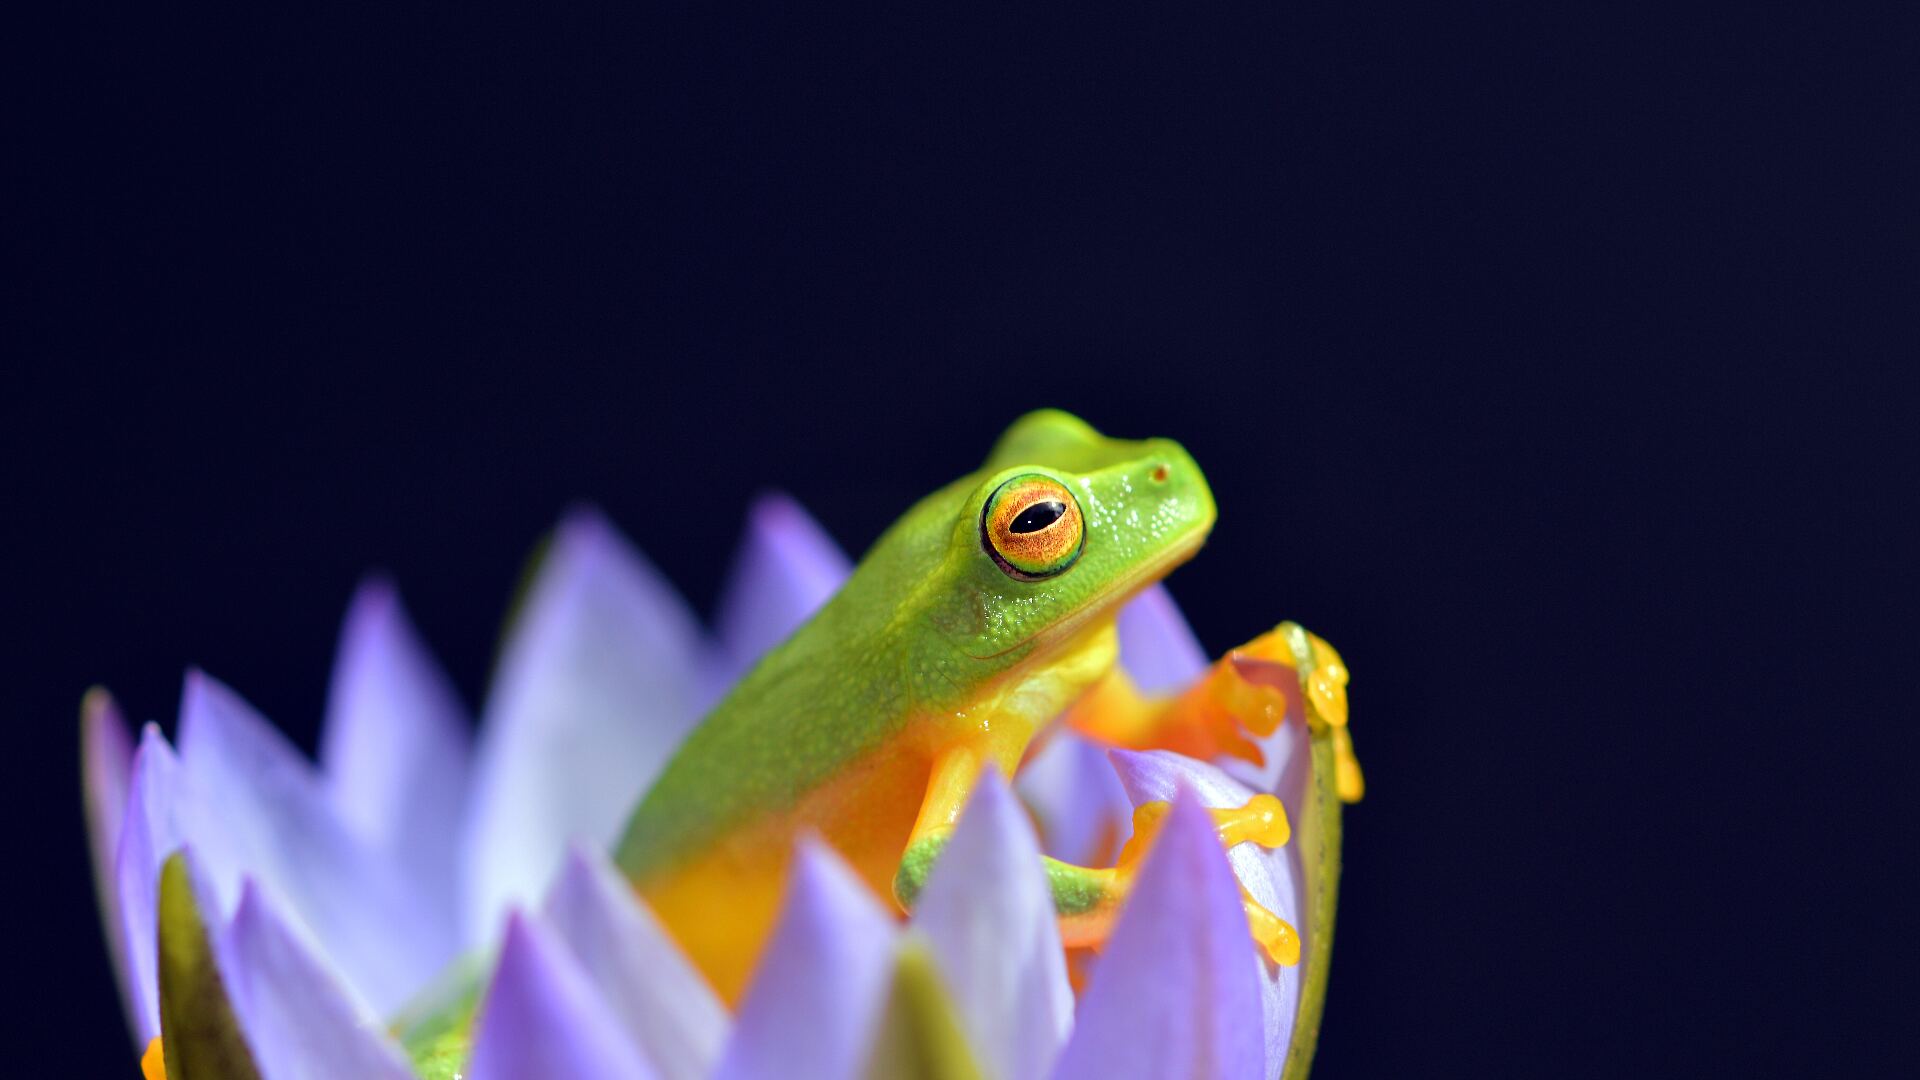 1920x1080-5403057-frog-tree-frog-petal-macro-frog-eye-flower-david-clode-wake-up-frog-close-up-frog-litoria-gracilentum-dainty-treefrog-waterlily-frog-rise-and-shine-green-creative-commons-images